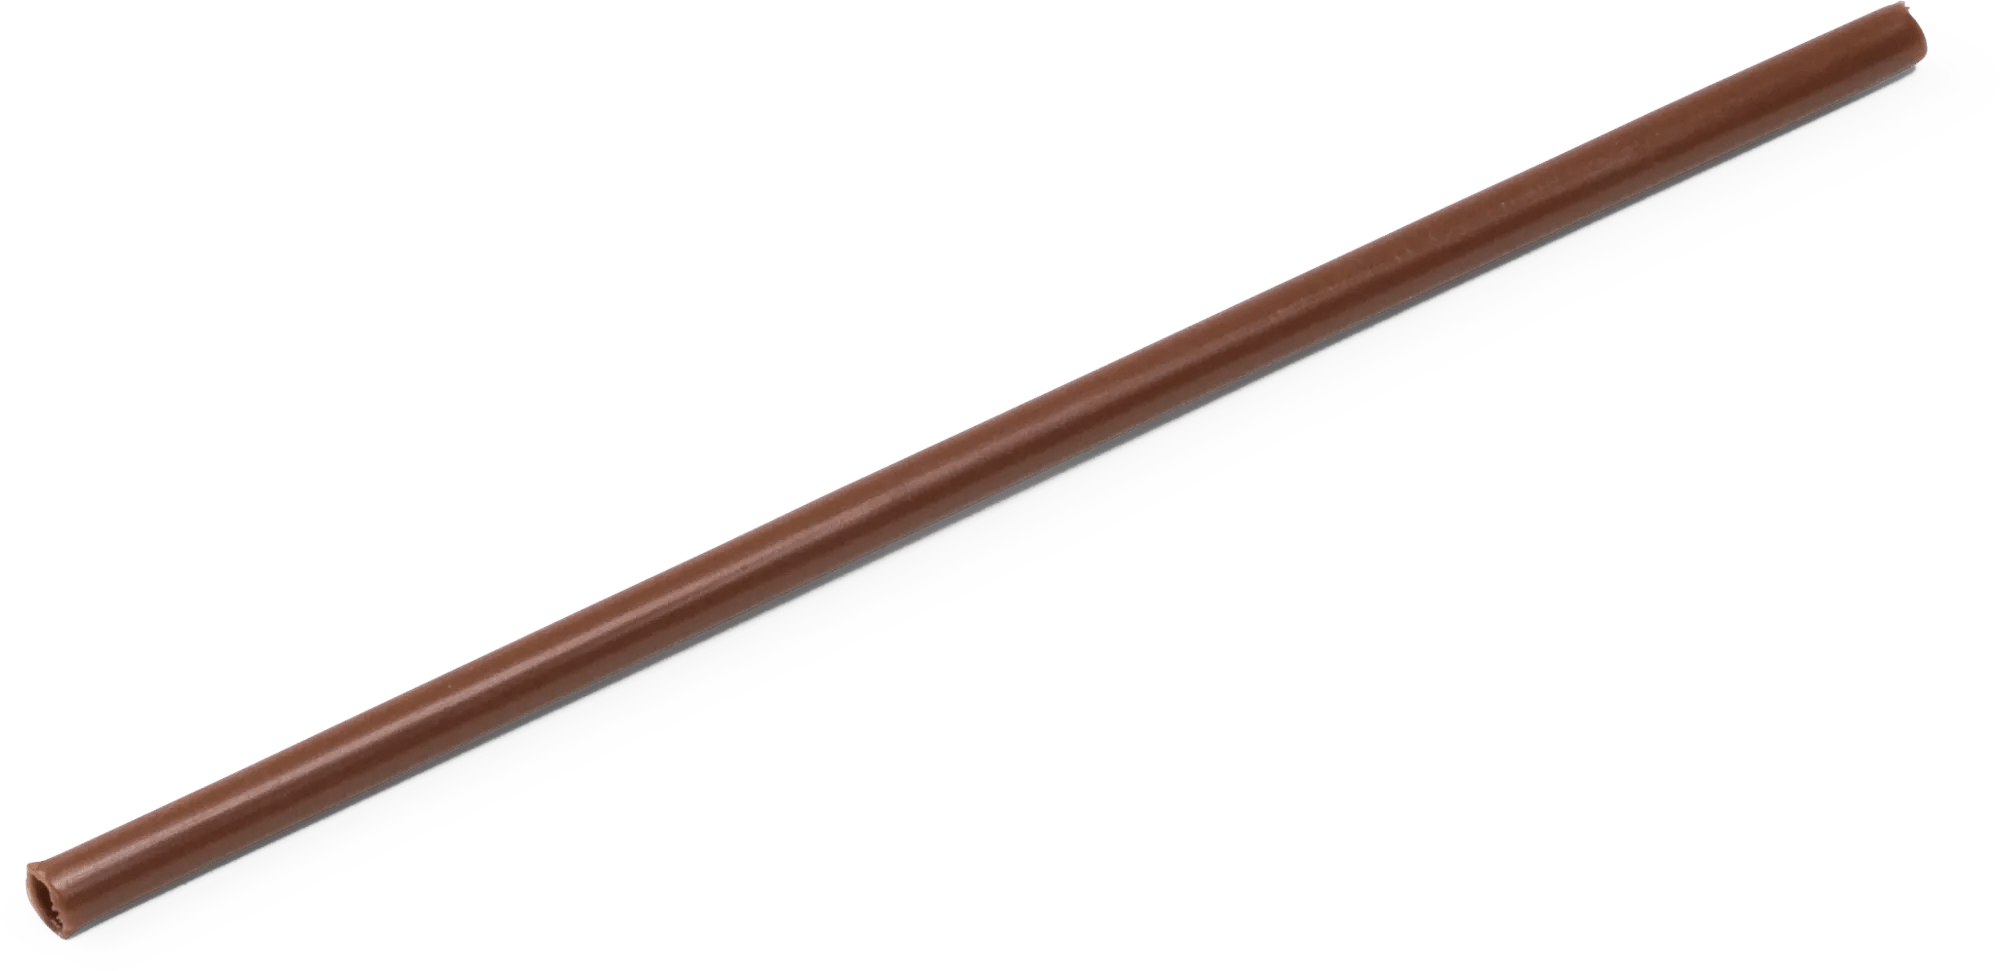 20 - 18 AWG 1/8" x 6" Brown Dual-Wall Heat-Shrink Tubing